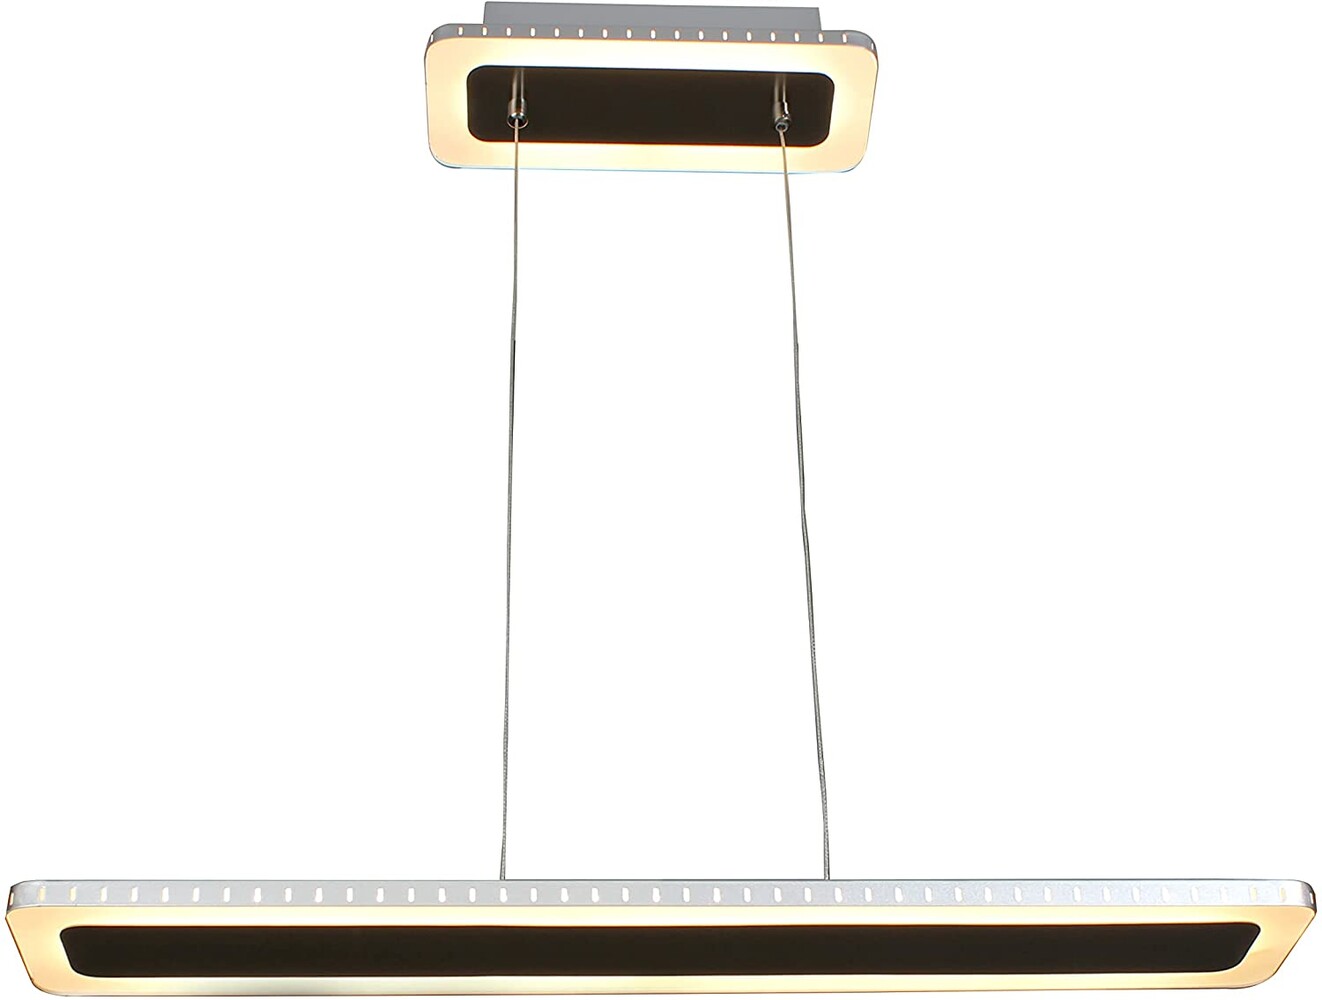 Faszinierende ECO-LIGHT Pendelleuchte in edlem Edelstahl mit innovativem 3-Stufen-Dimmer